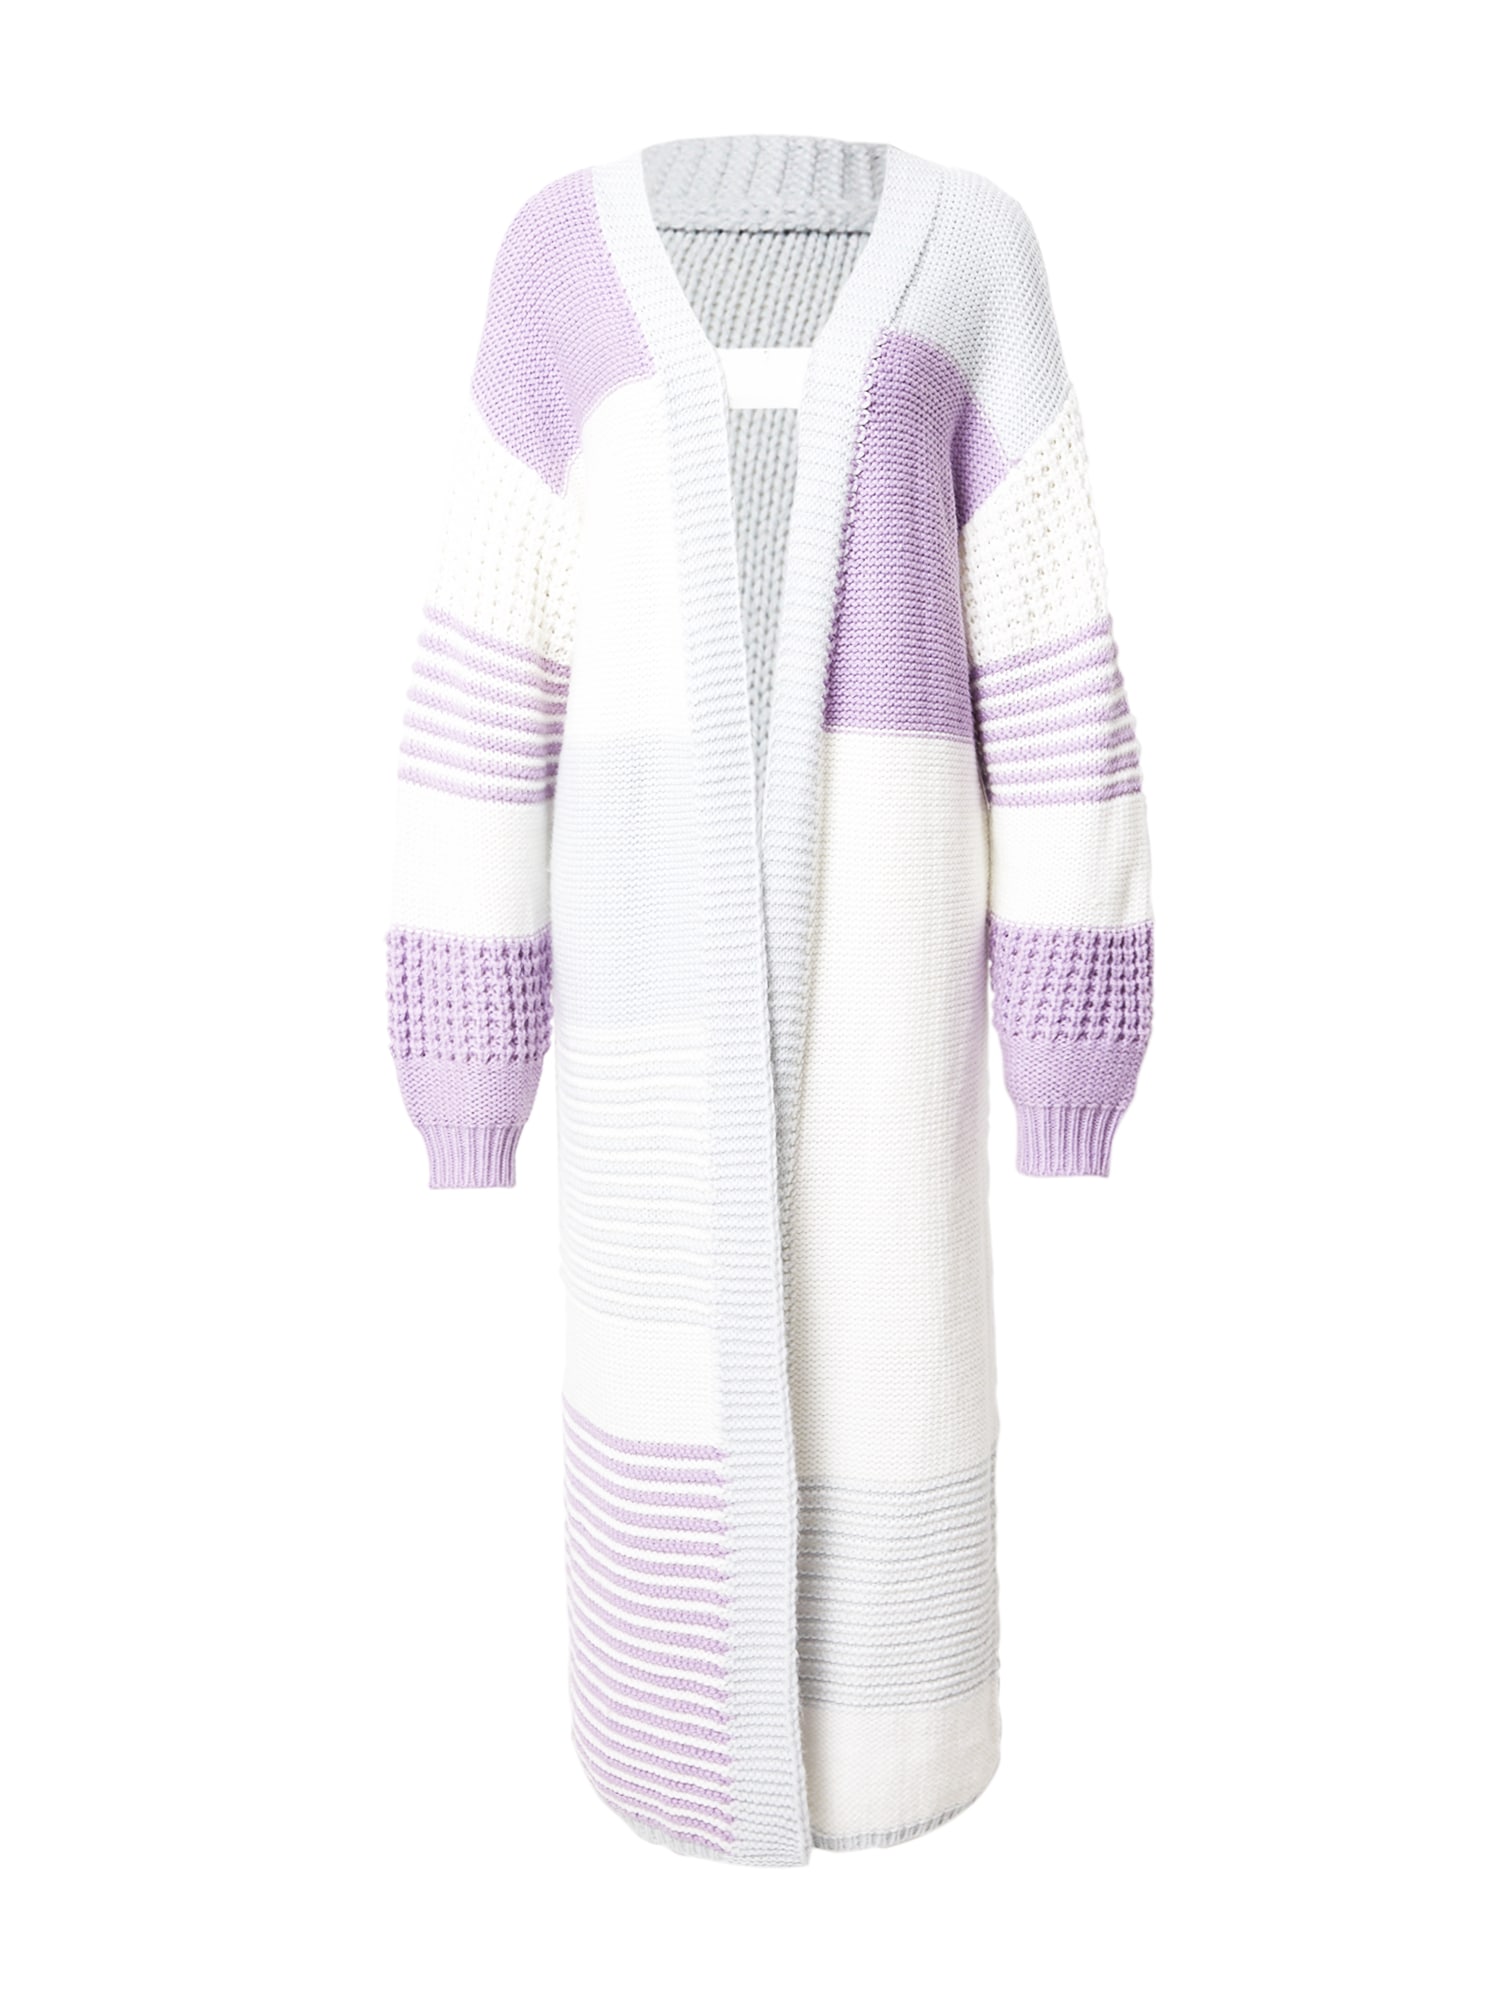 Pletený kabát May svetlomodrá fialová biela florence by mills exclusive for ABOUT YOU